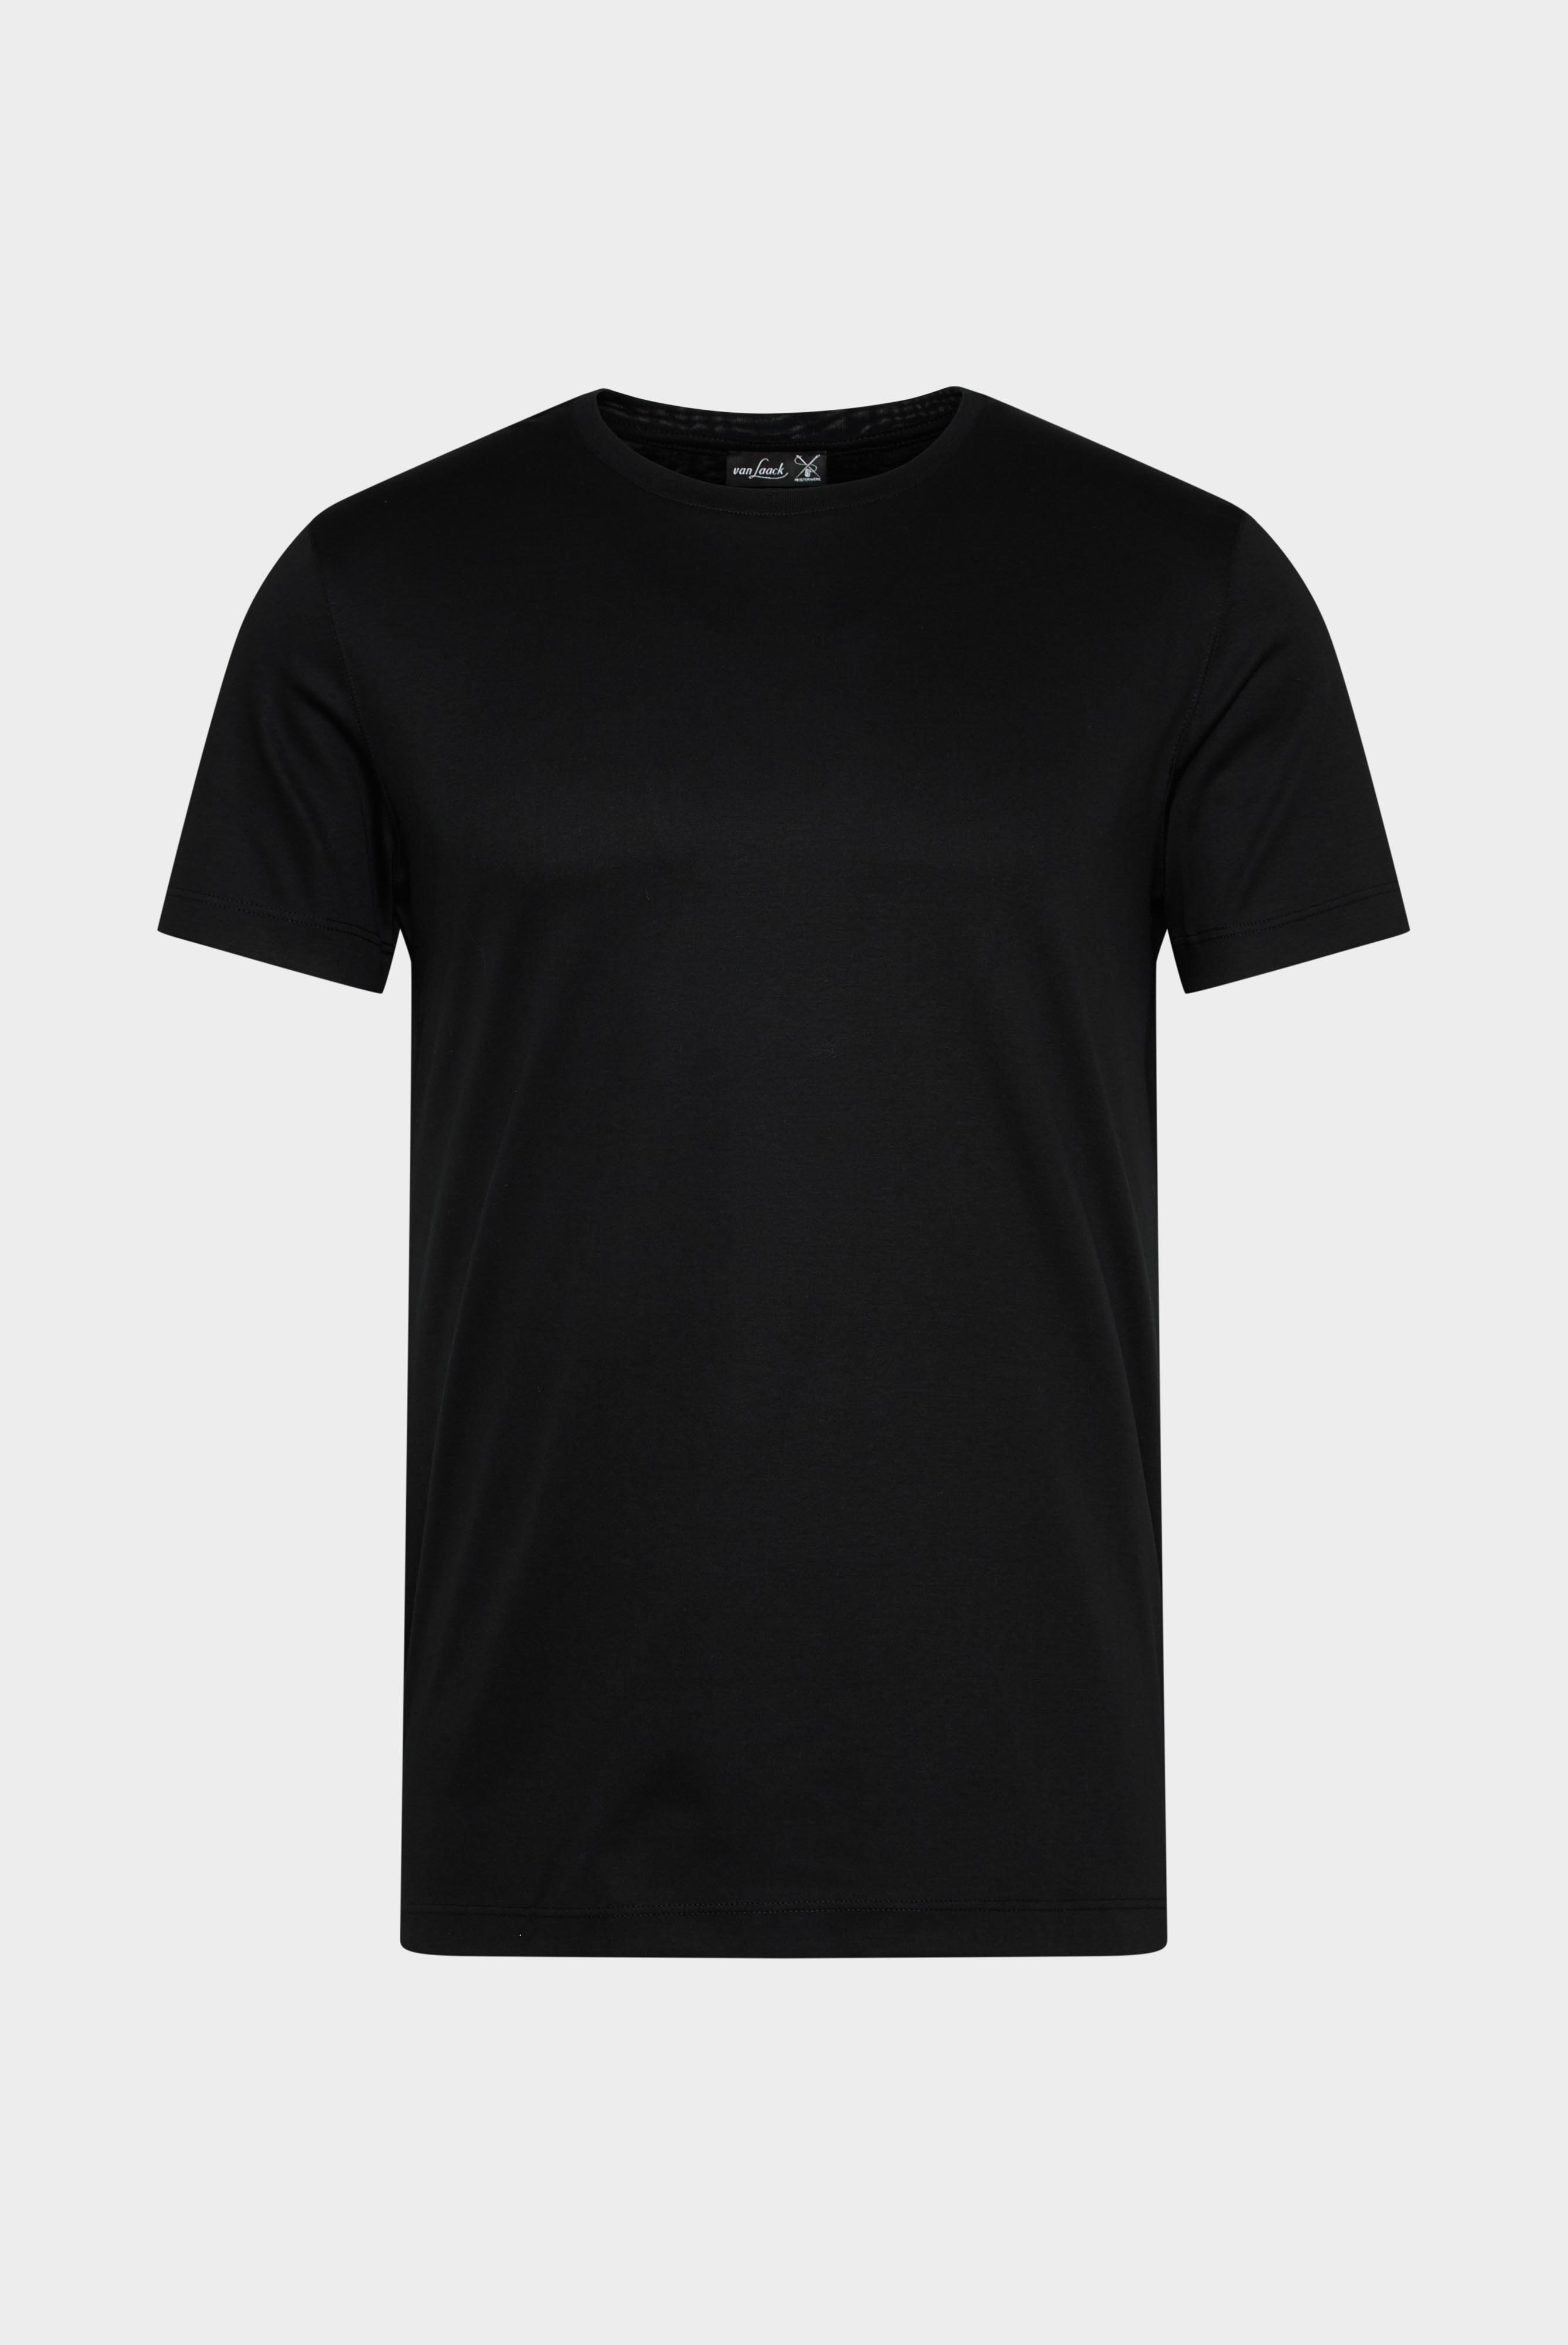 T-Shirts+Rundhals Jersey T-Shirt Slim Fit+20.1717.UX.180031.099.XL